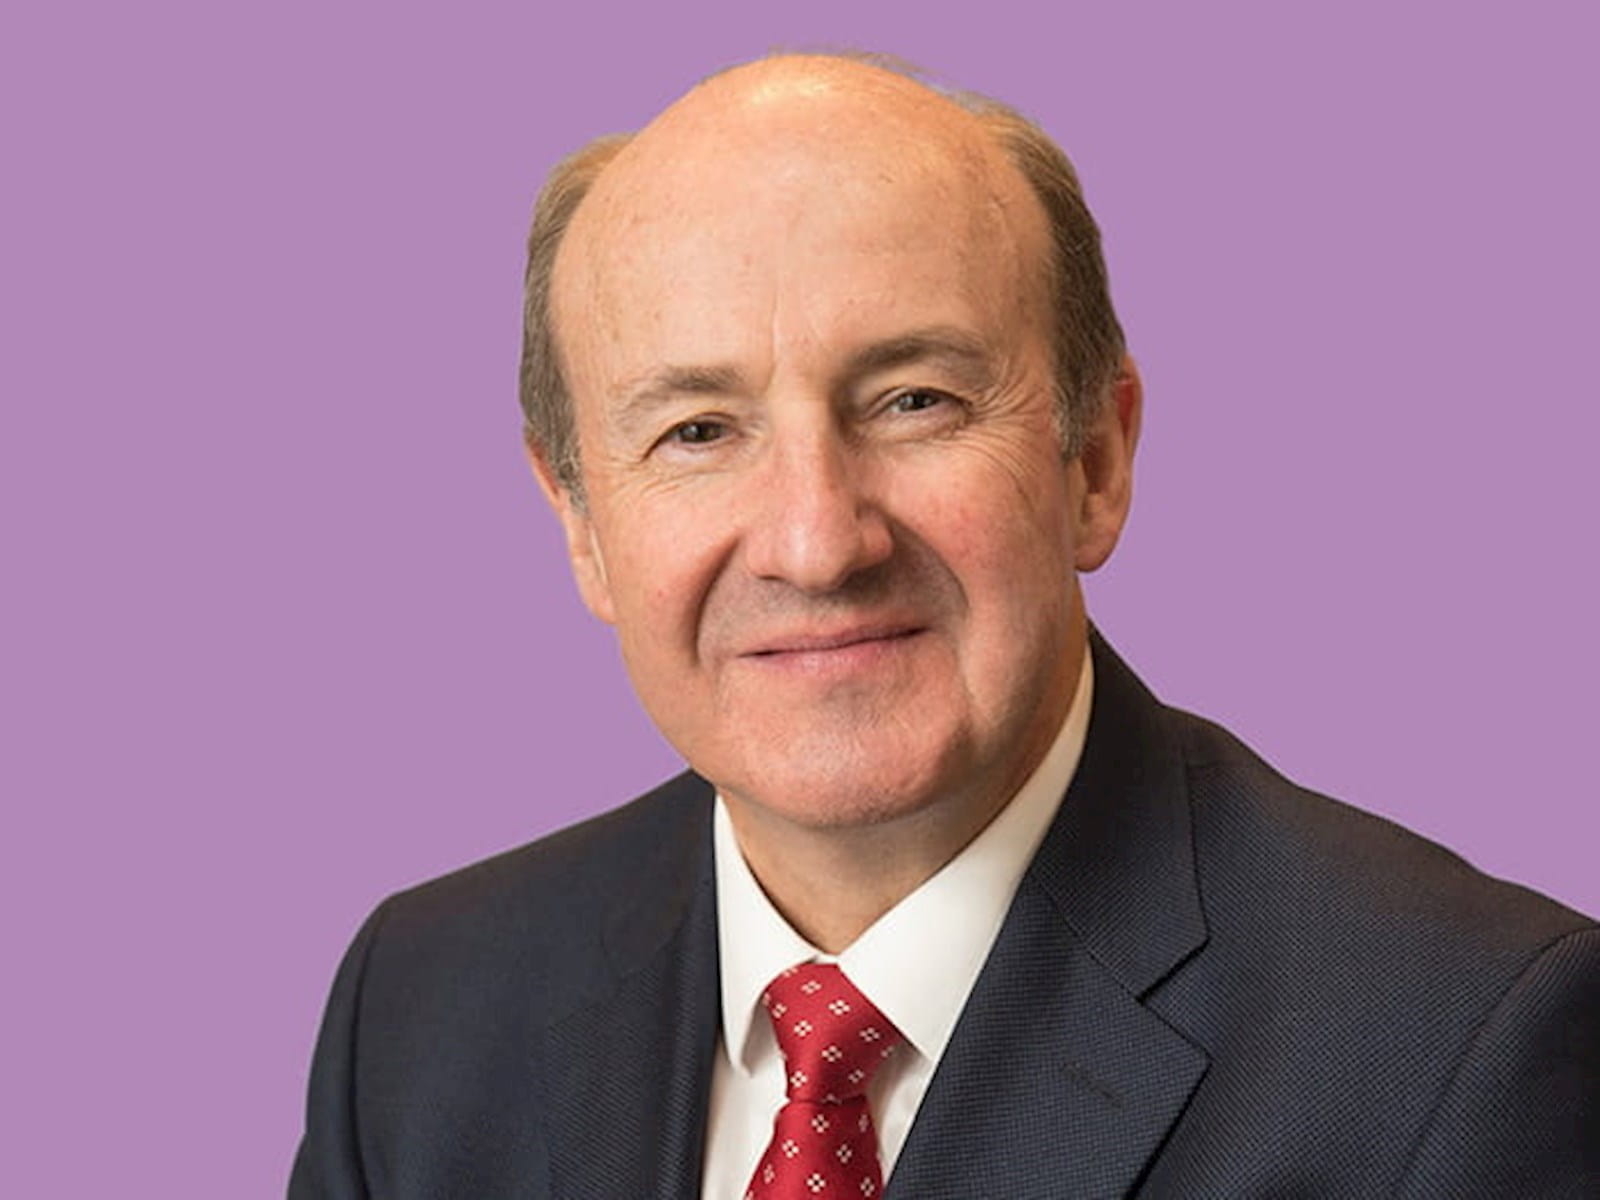 Michael Izza ICAEW CEO Chief Executive man suit tie purple background